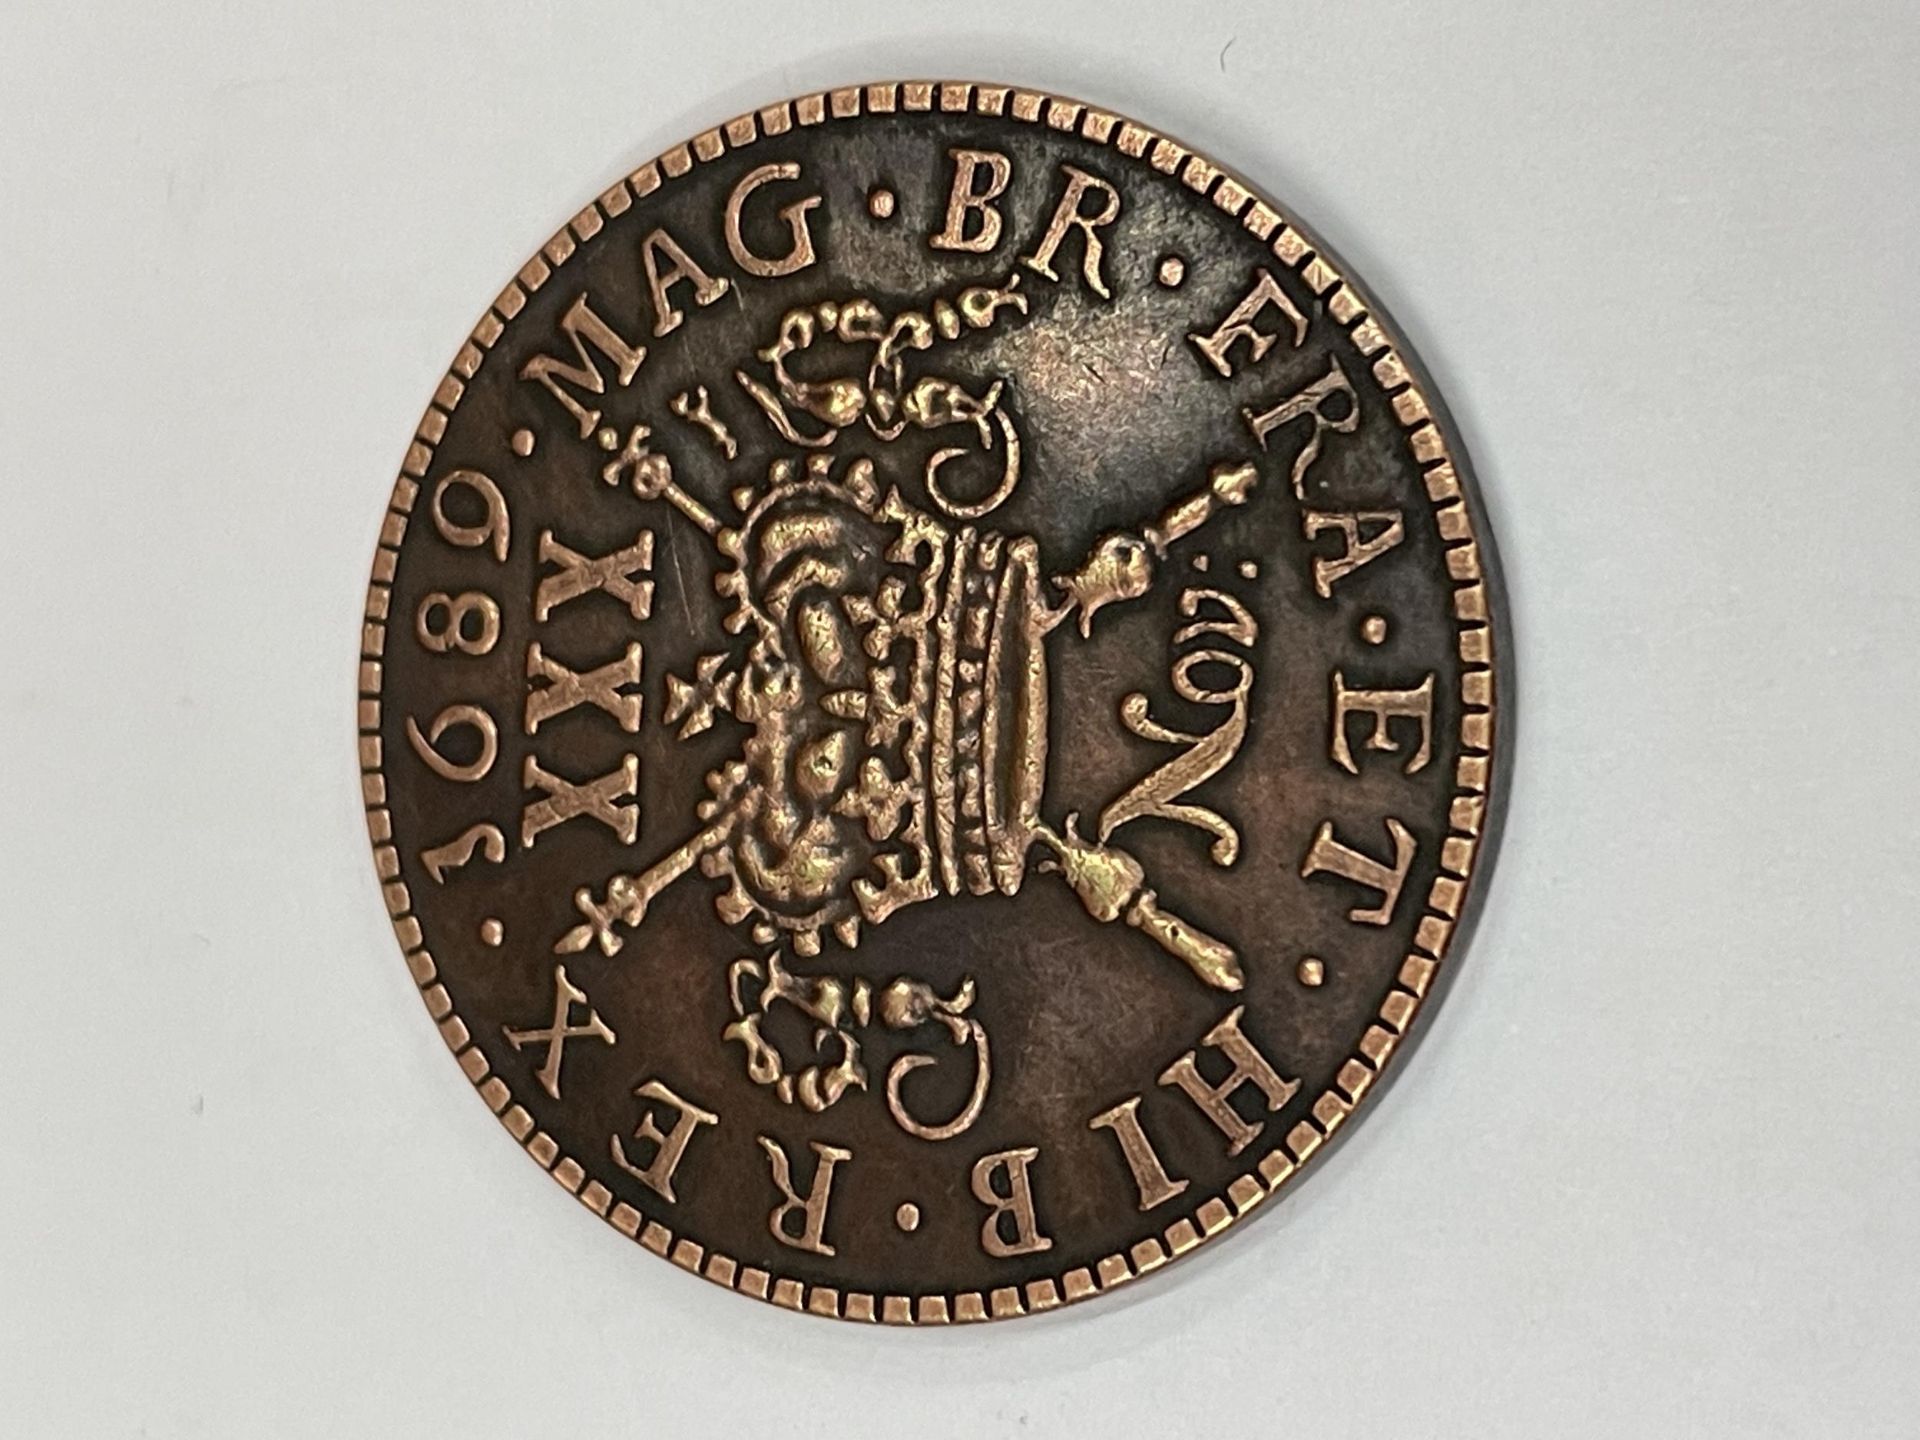 AN EDWARD II 1689 THREE CROSSES COIN